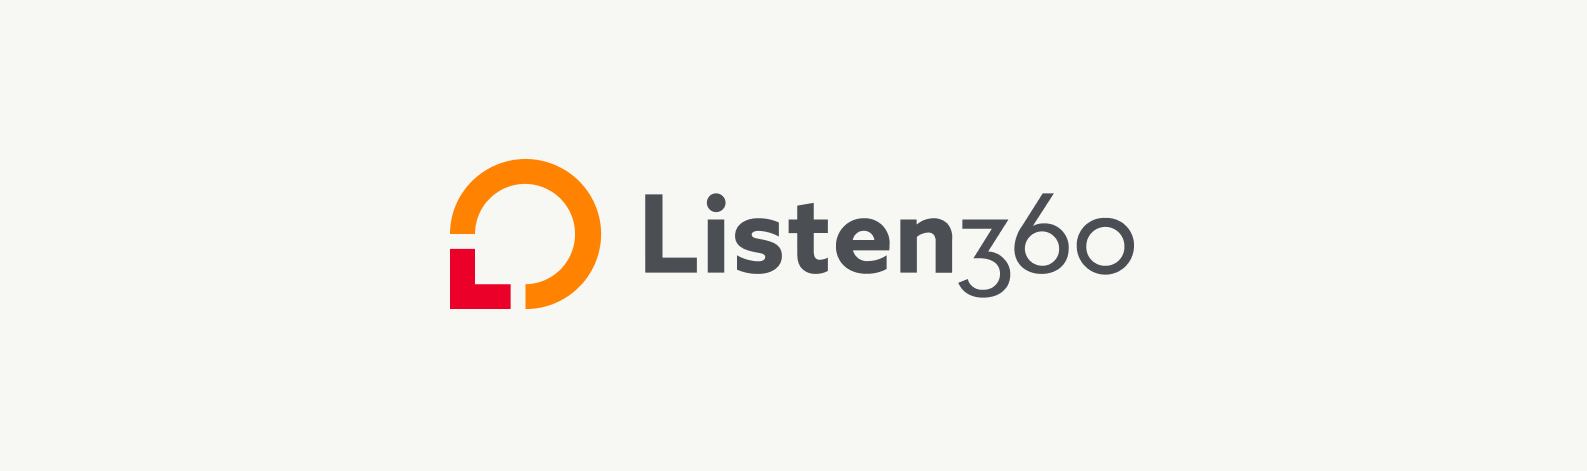 Listen360